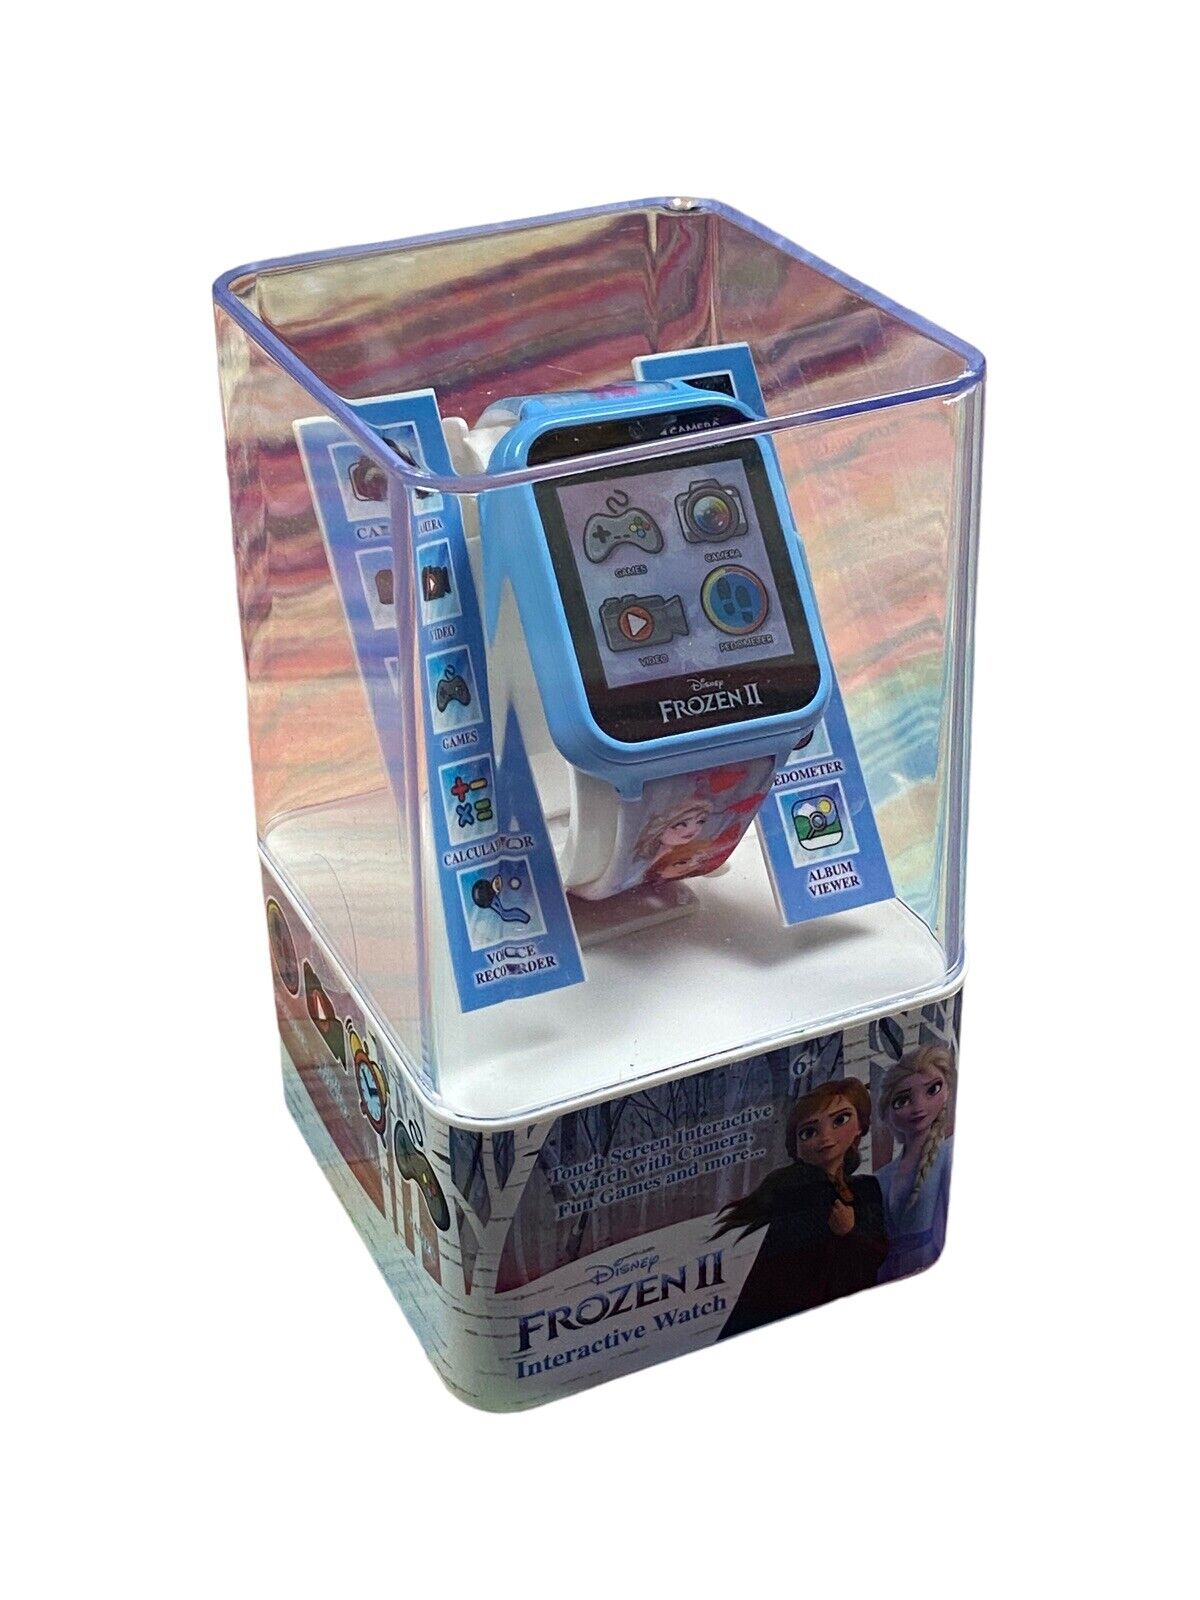 New Disney Frozen II Kids Smart Watch w/ Camera Pedometer Calculator And Games